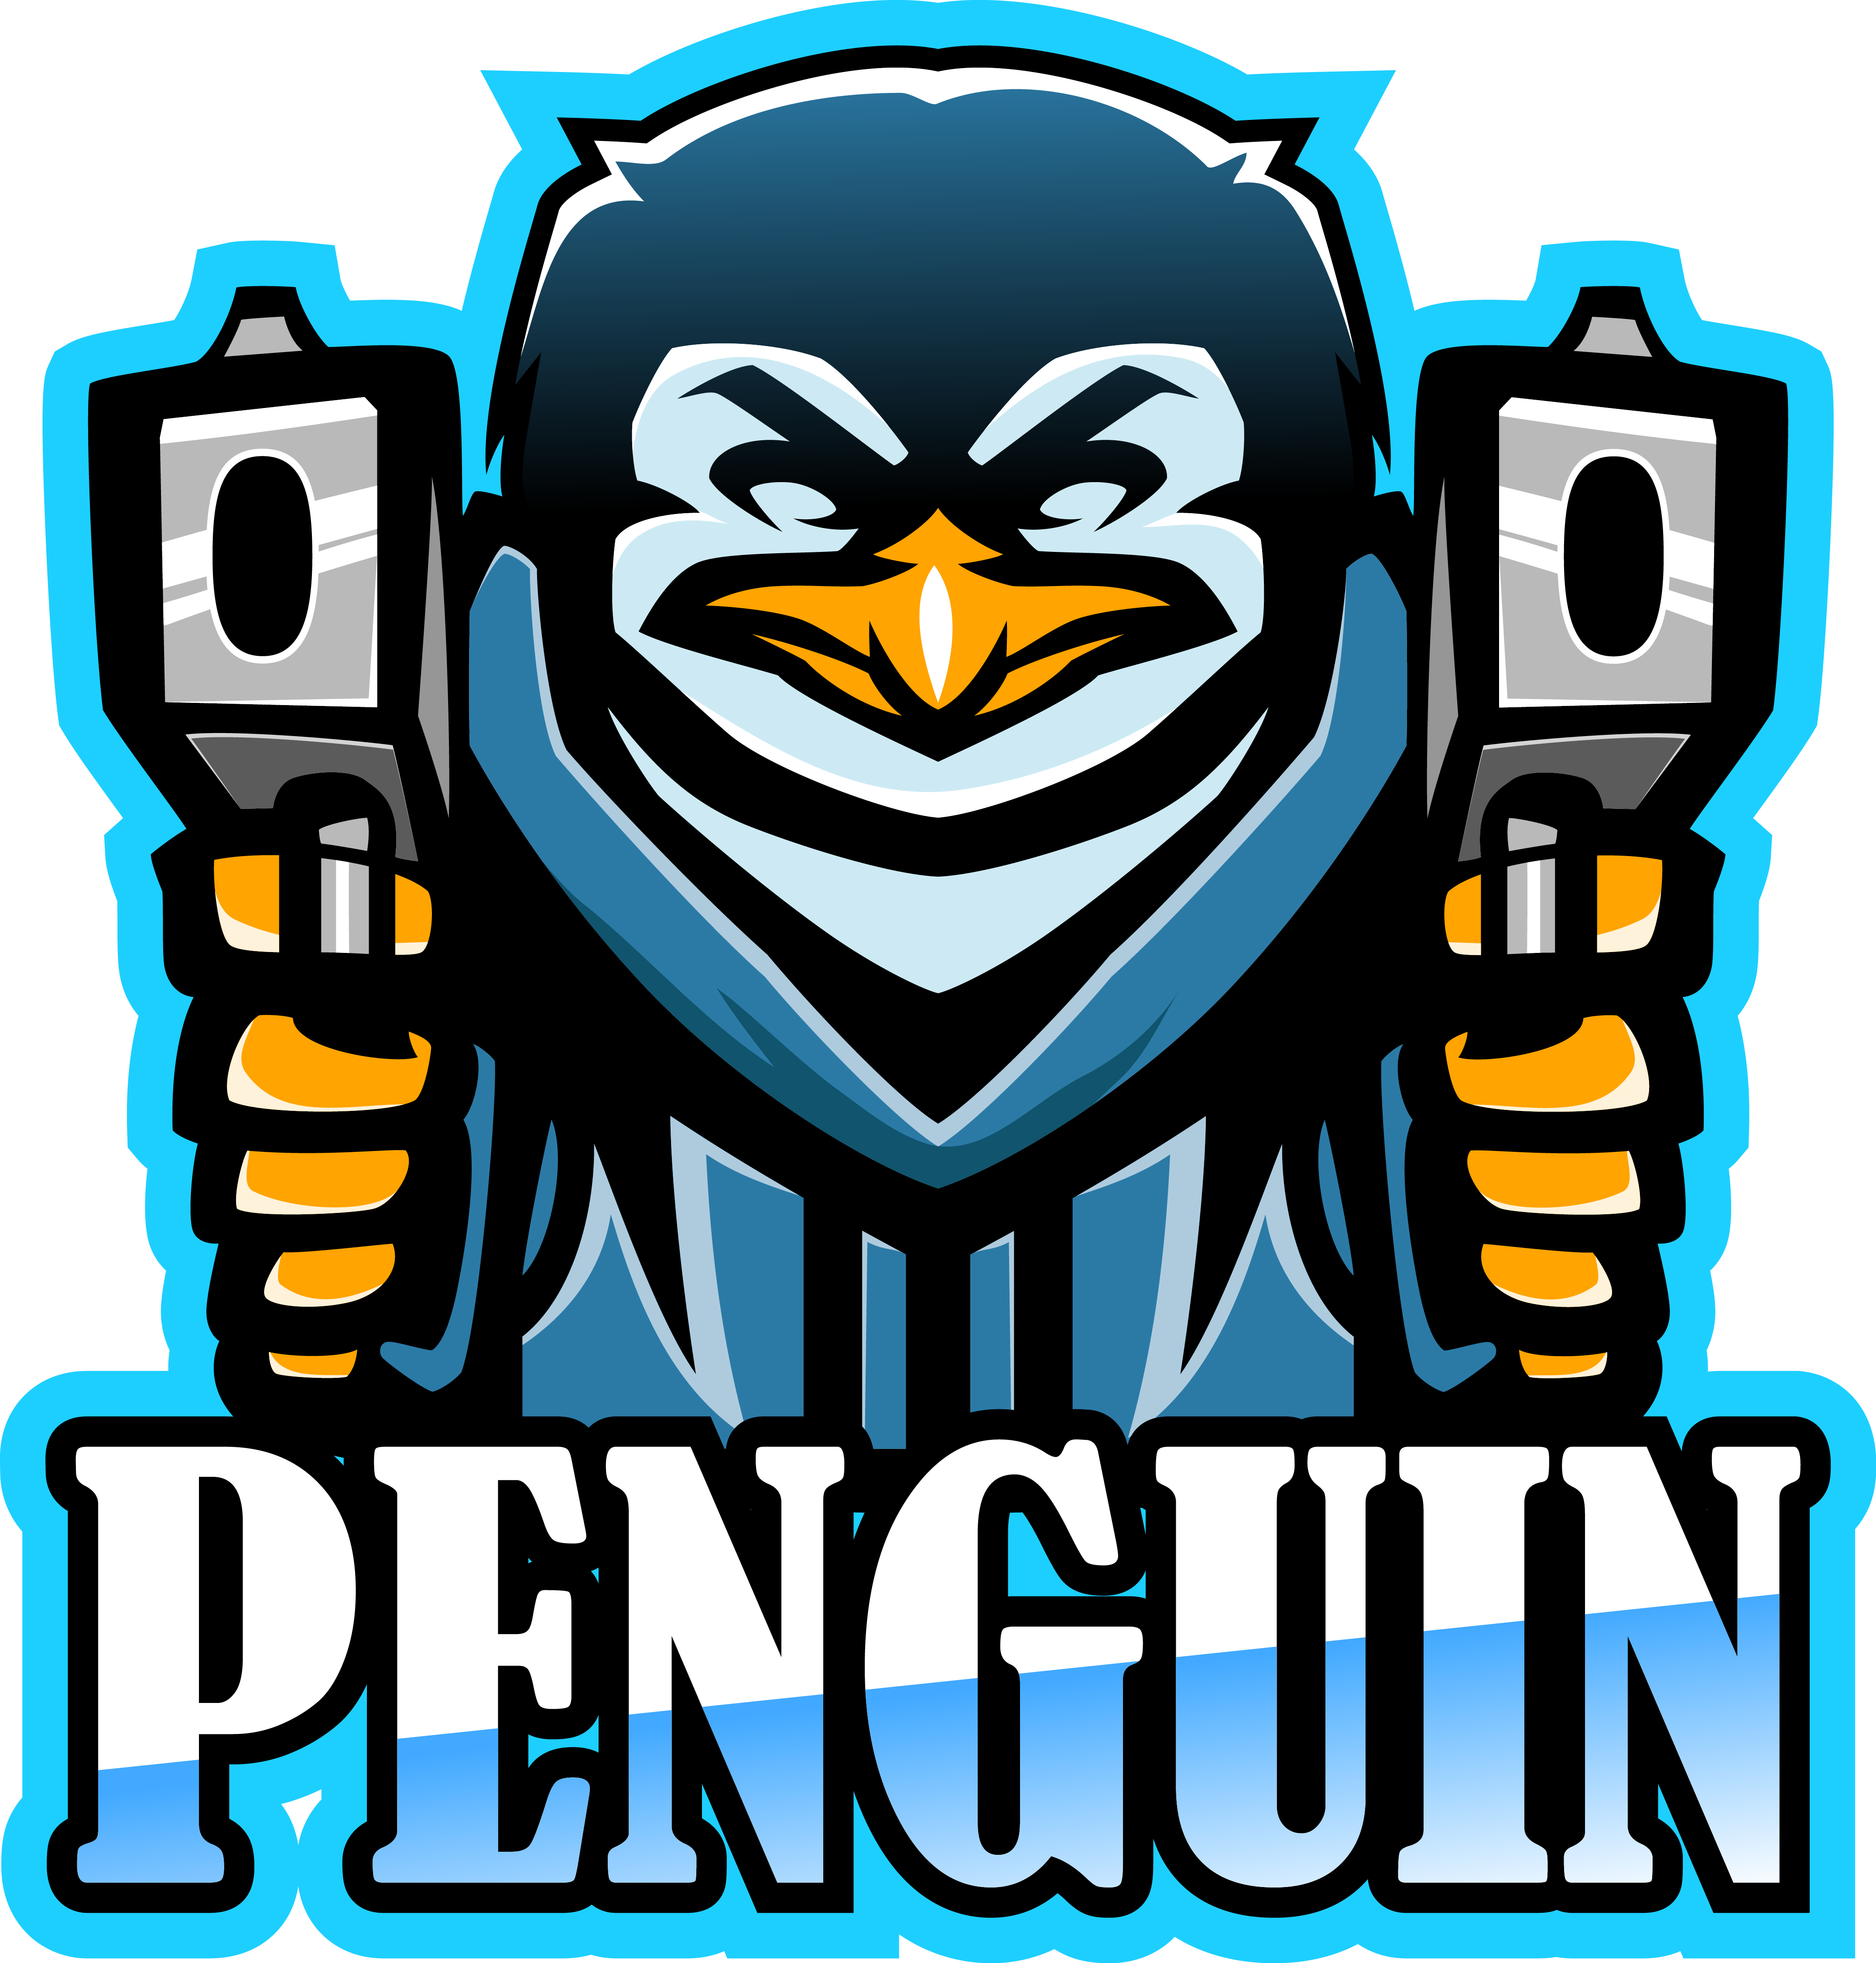 Penguin esport mascot logo design with gun By Visink | TheHungryJPEG.com